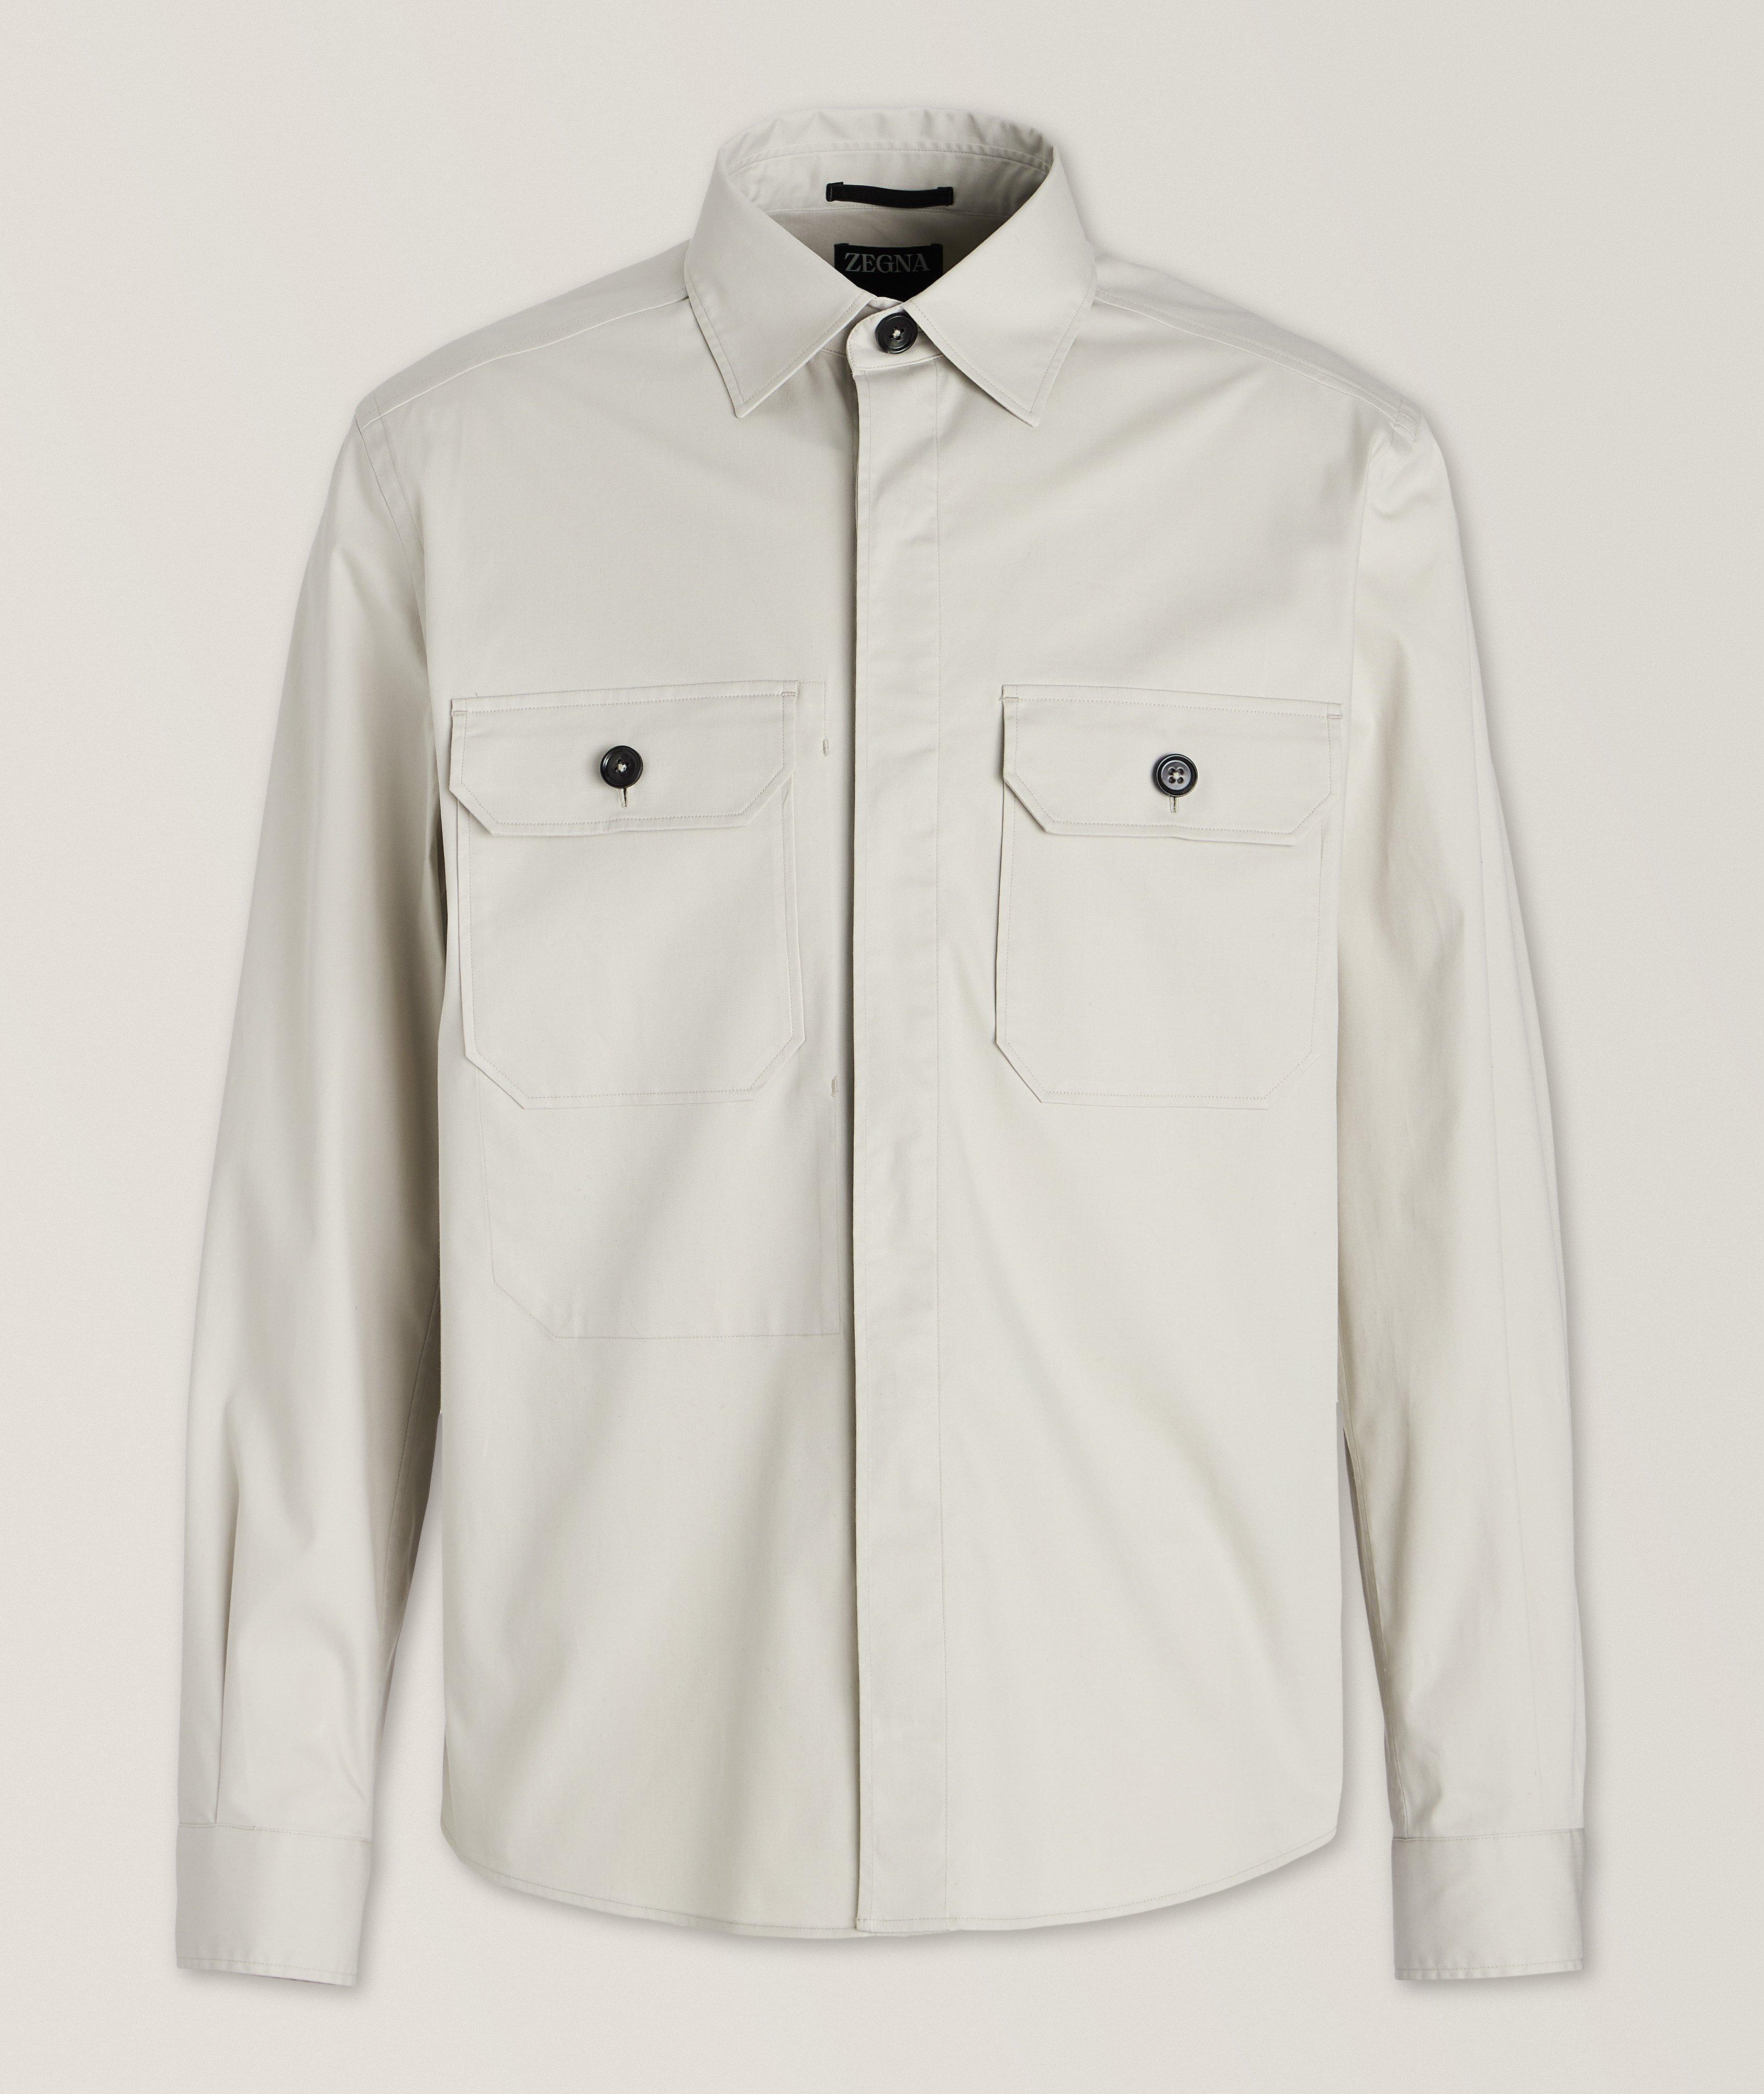 Zegna Premium Cotton Utility Overshirt